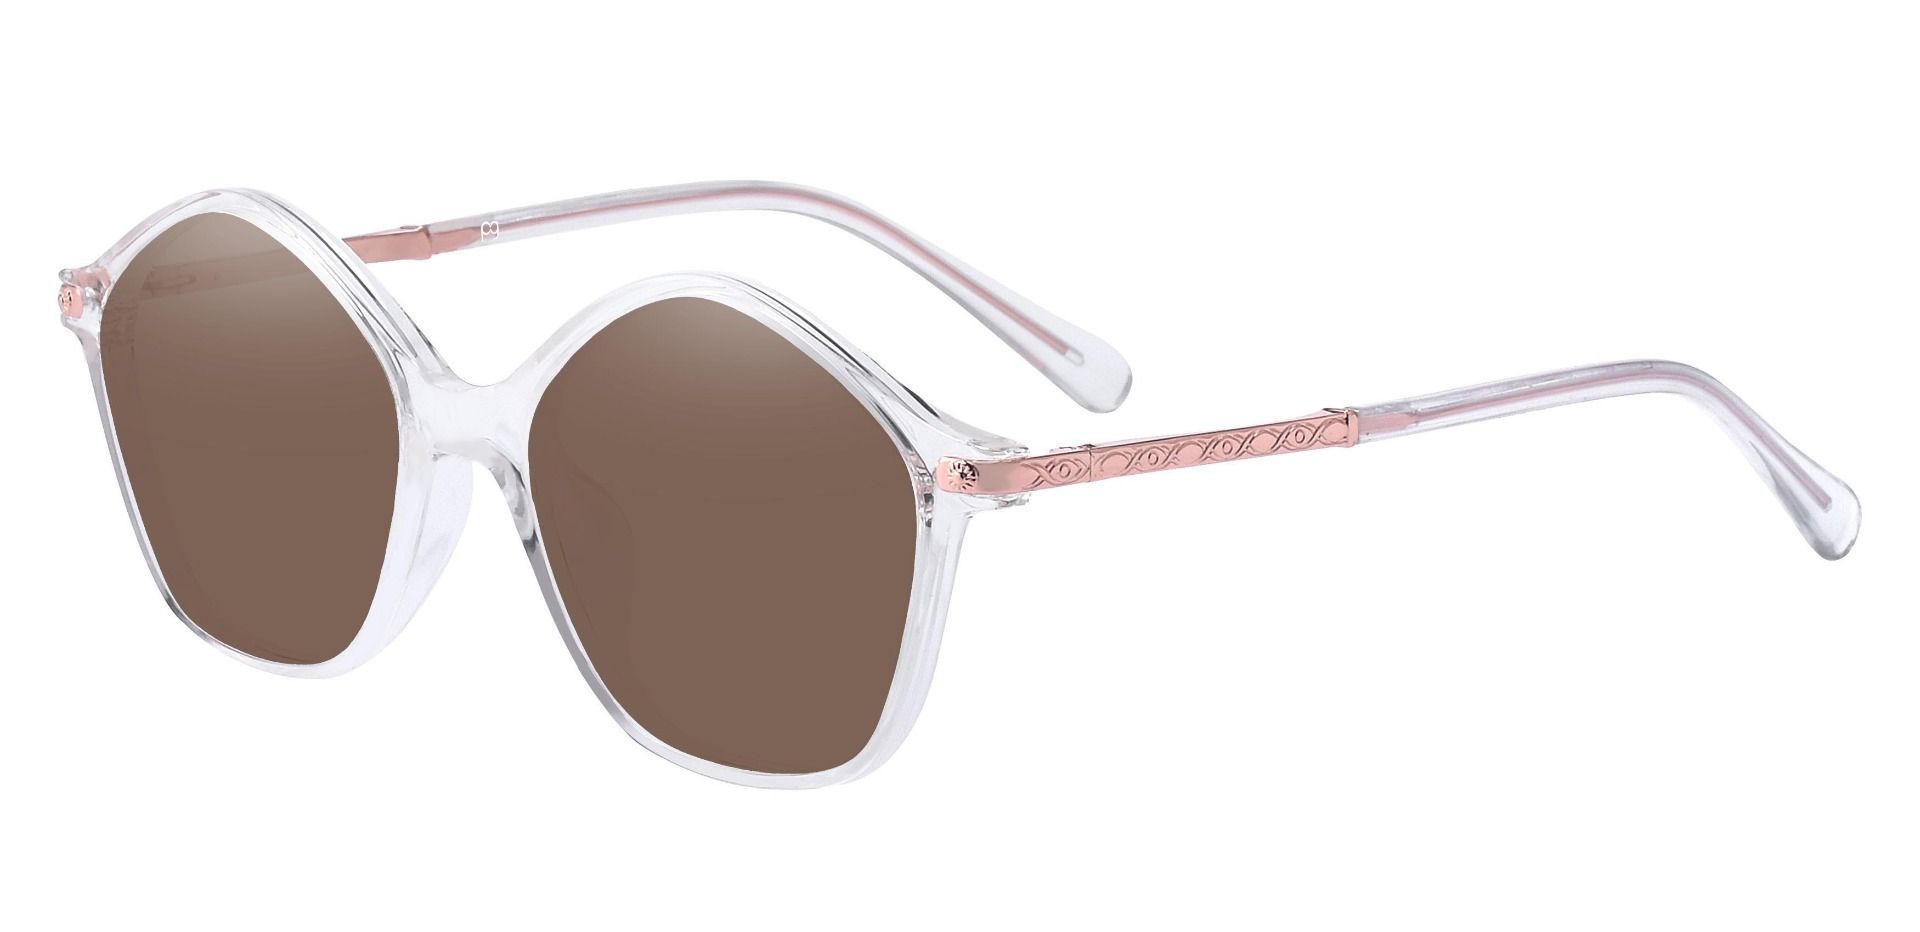 Boulder Geometric Prescription Sunglasses - Clear Frame With Brown Lenses